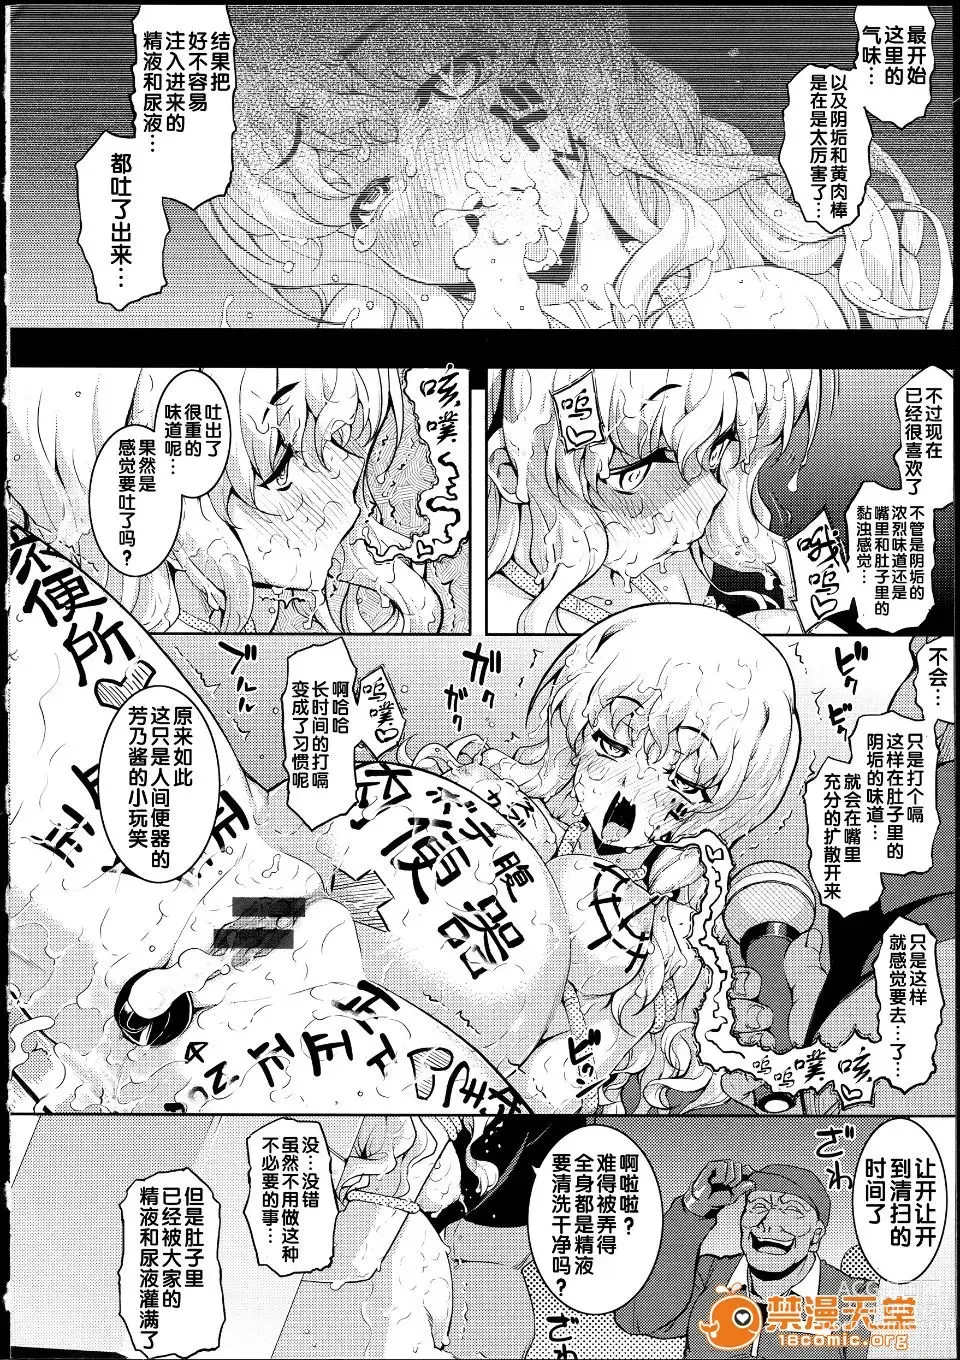 Page 221 of manga NTR²